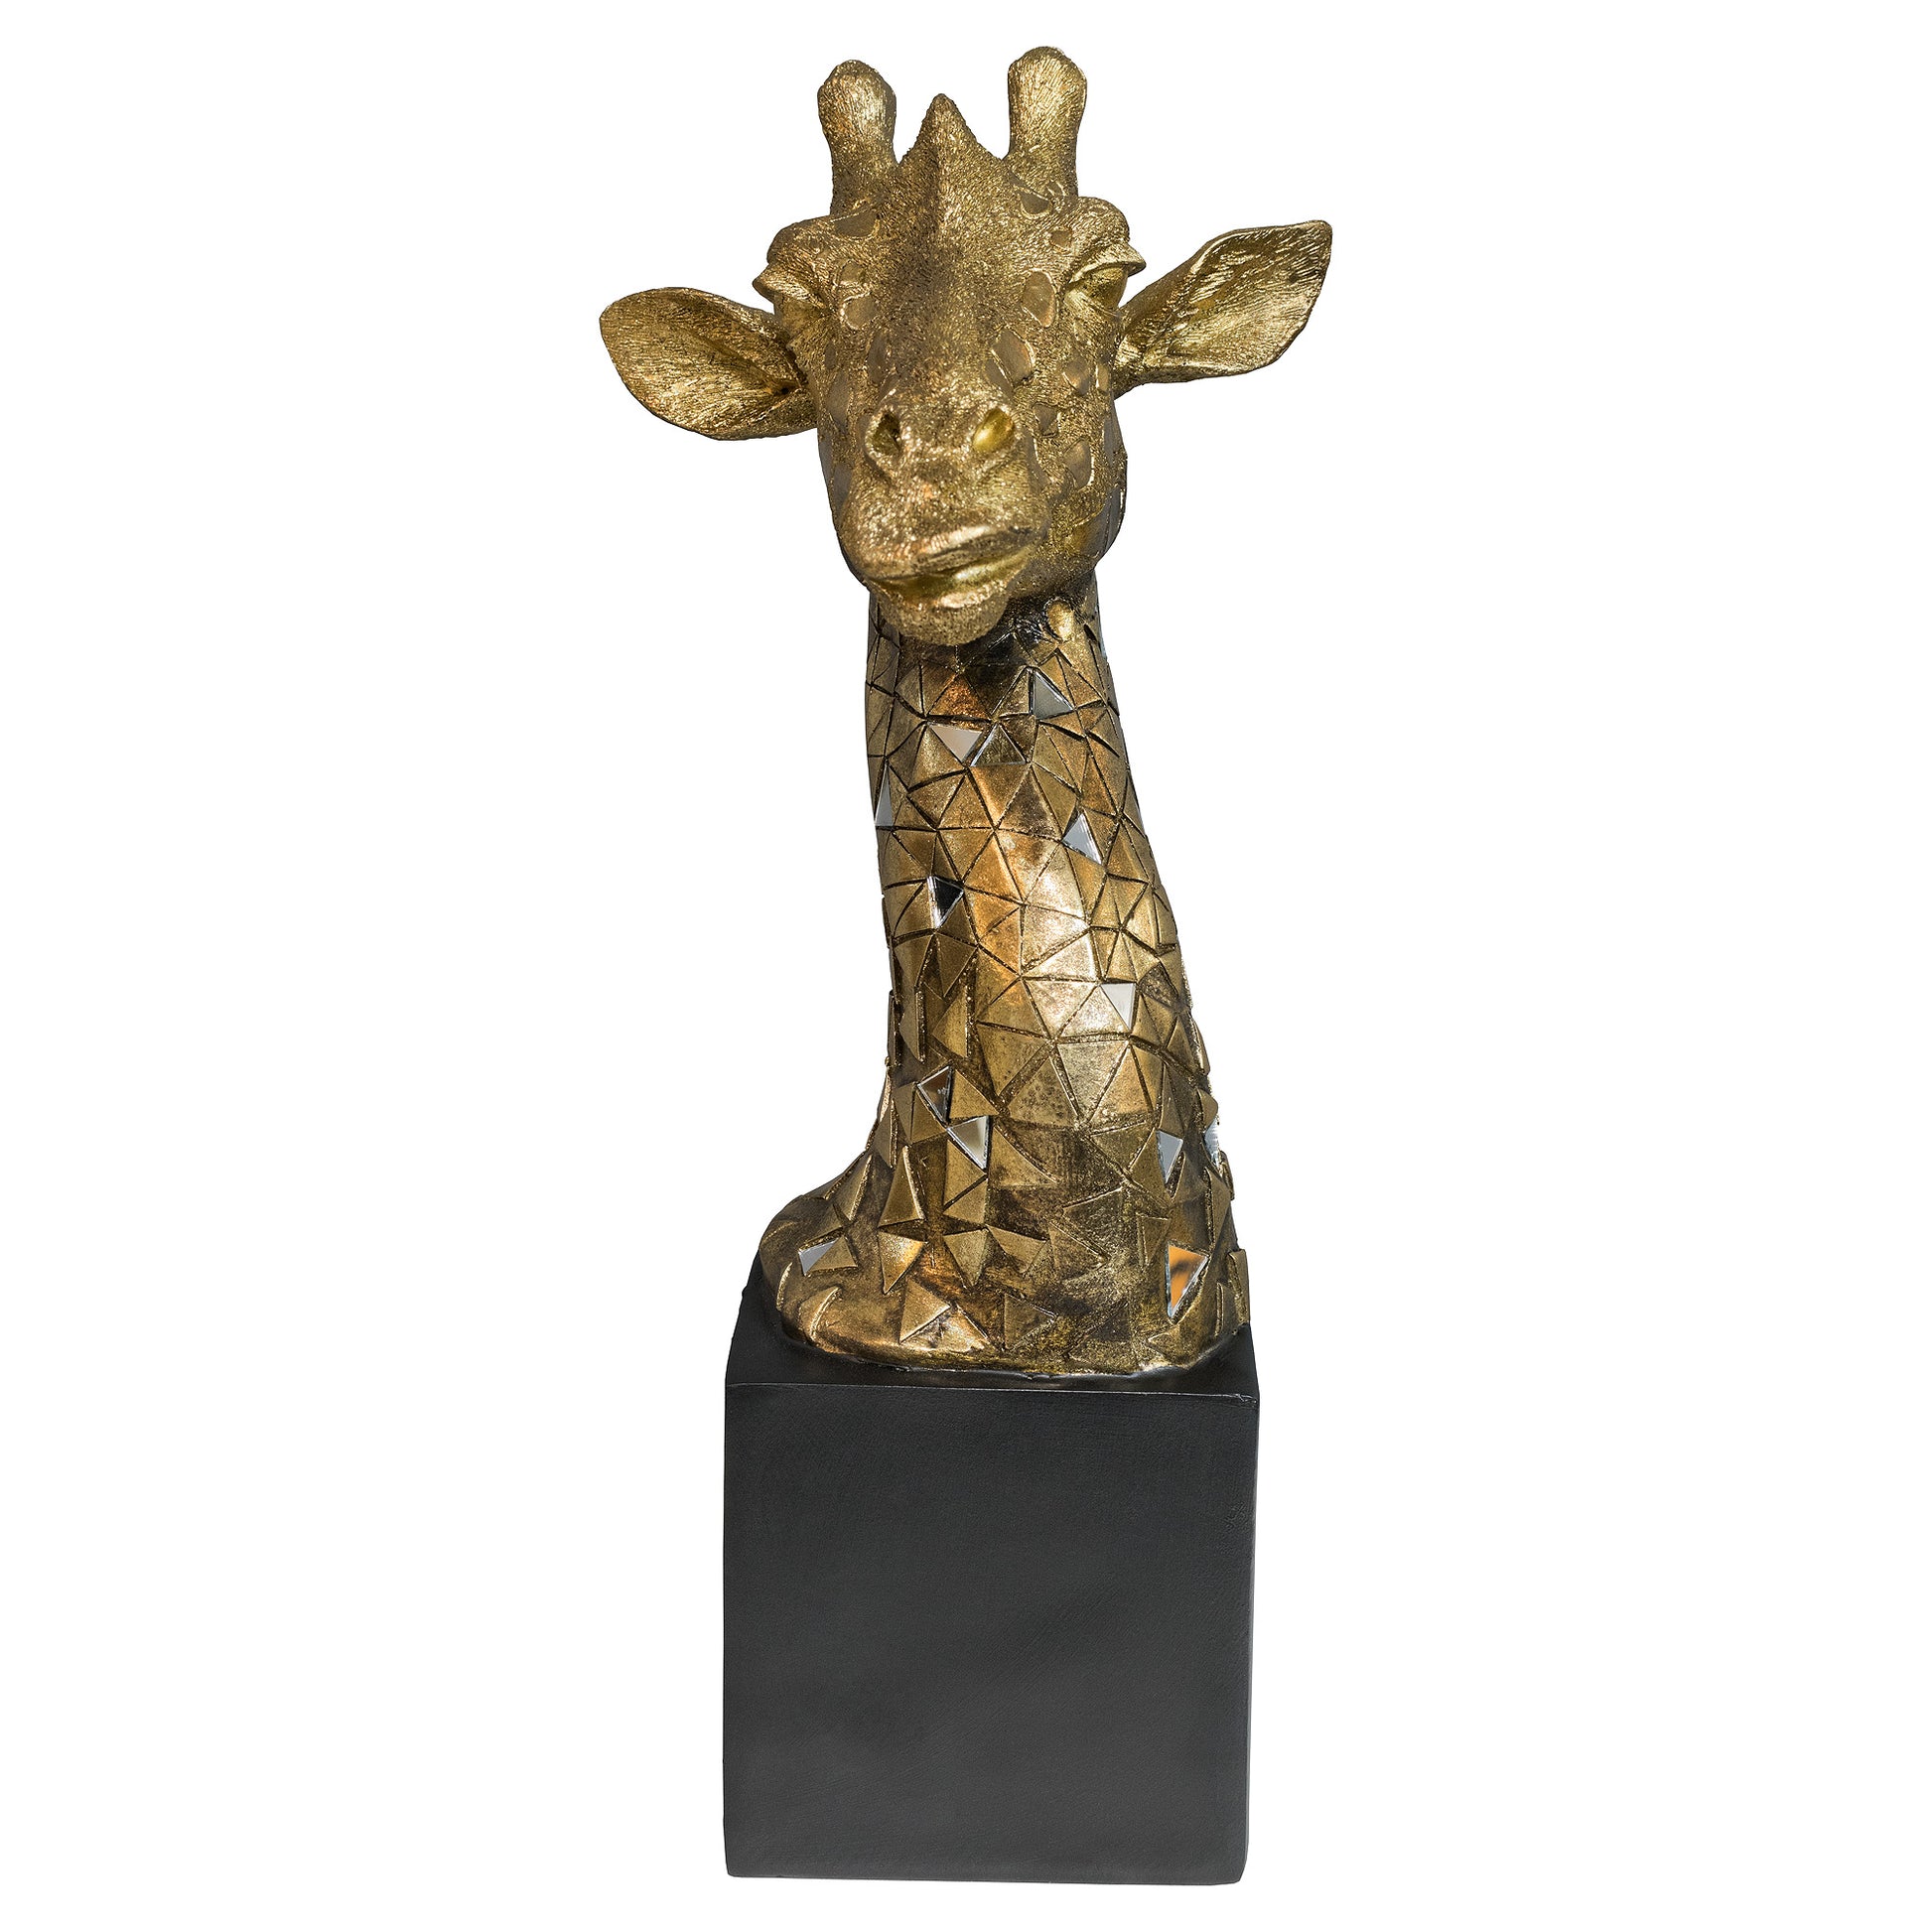 Gold Giraffe Bust Ornament - The Happy Den